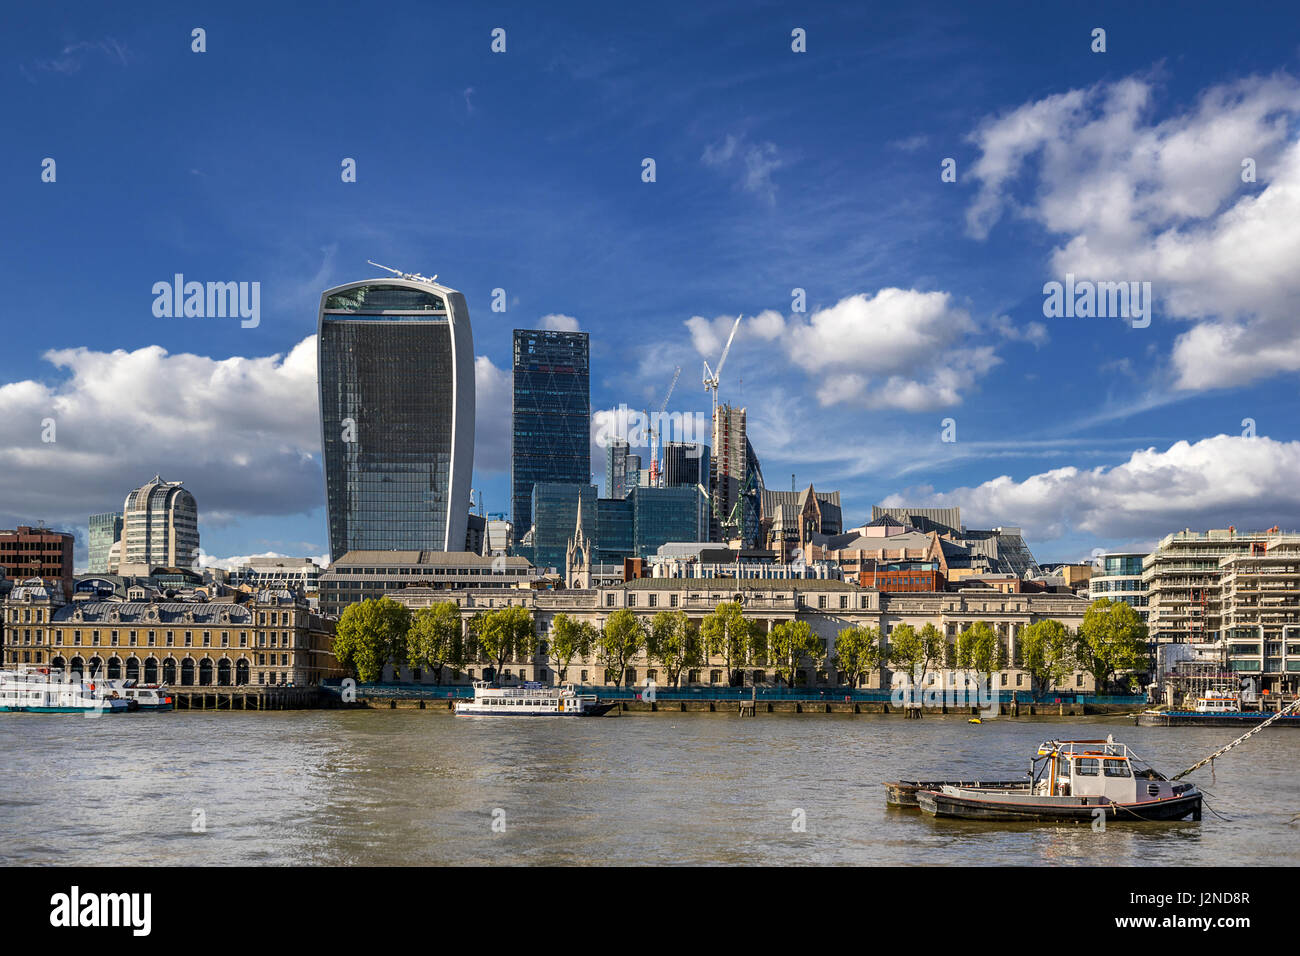 London embankment on the river Thames Stock Photo